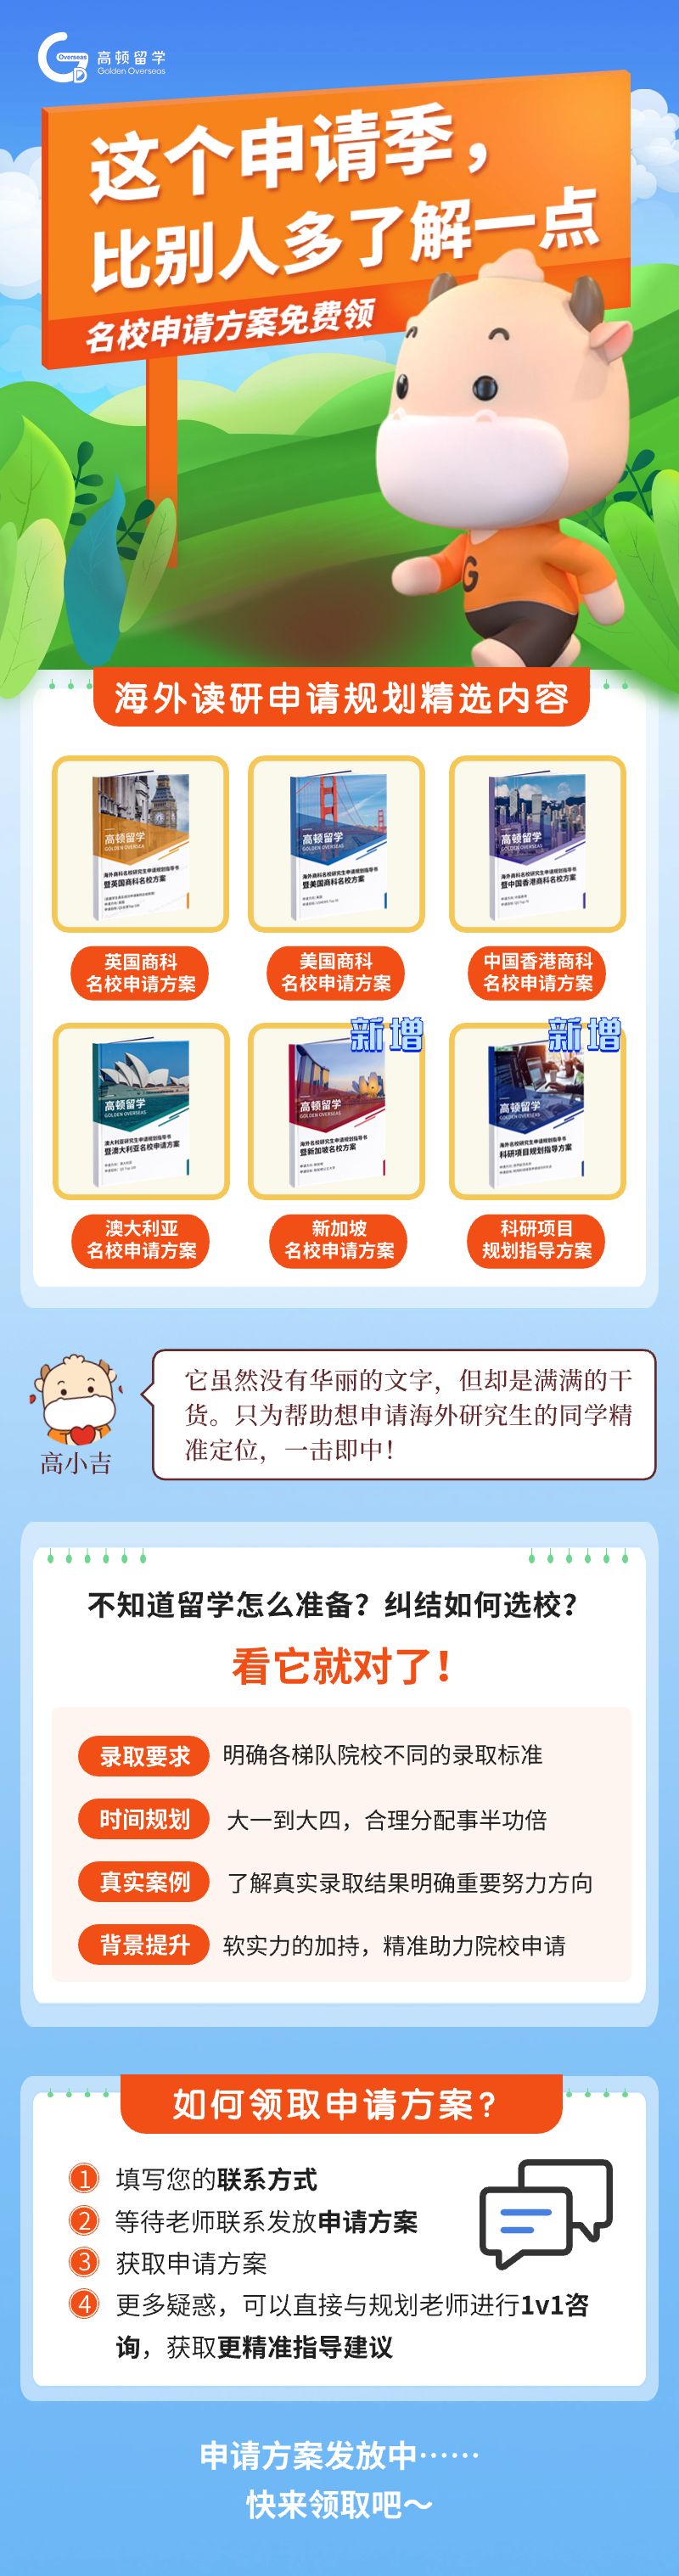 https://simg01.gaodunwangxiao.com/uploadfiles/product-center/202311/16/5570e_20231116143009.jpg